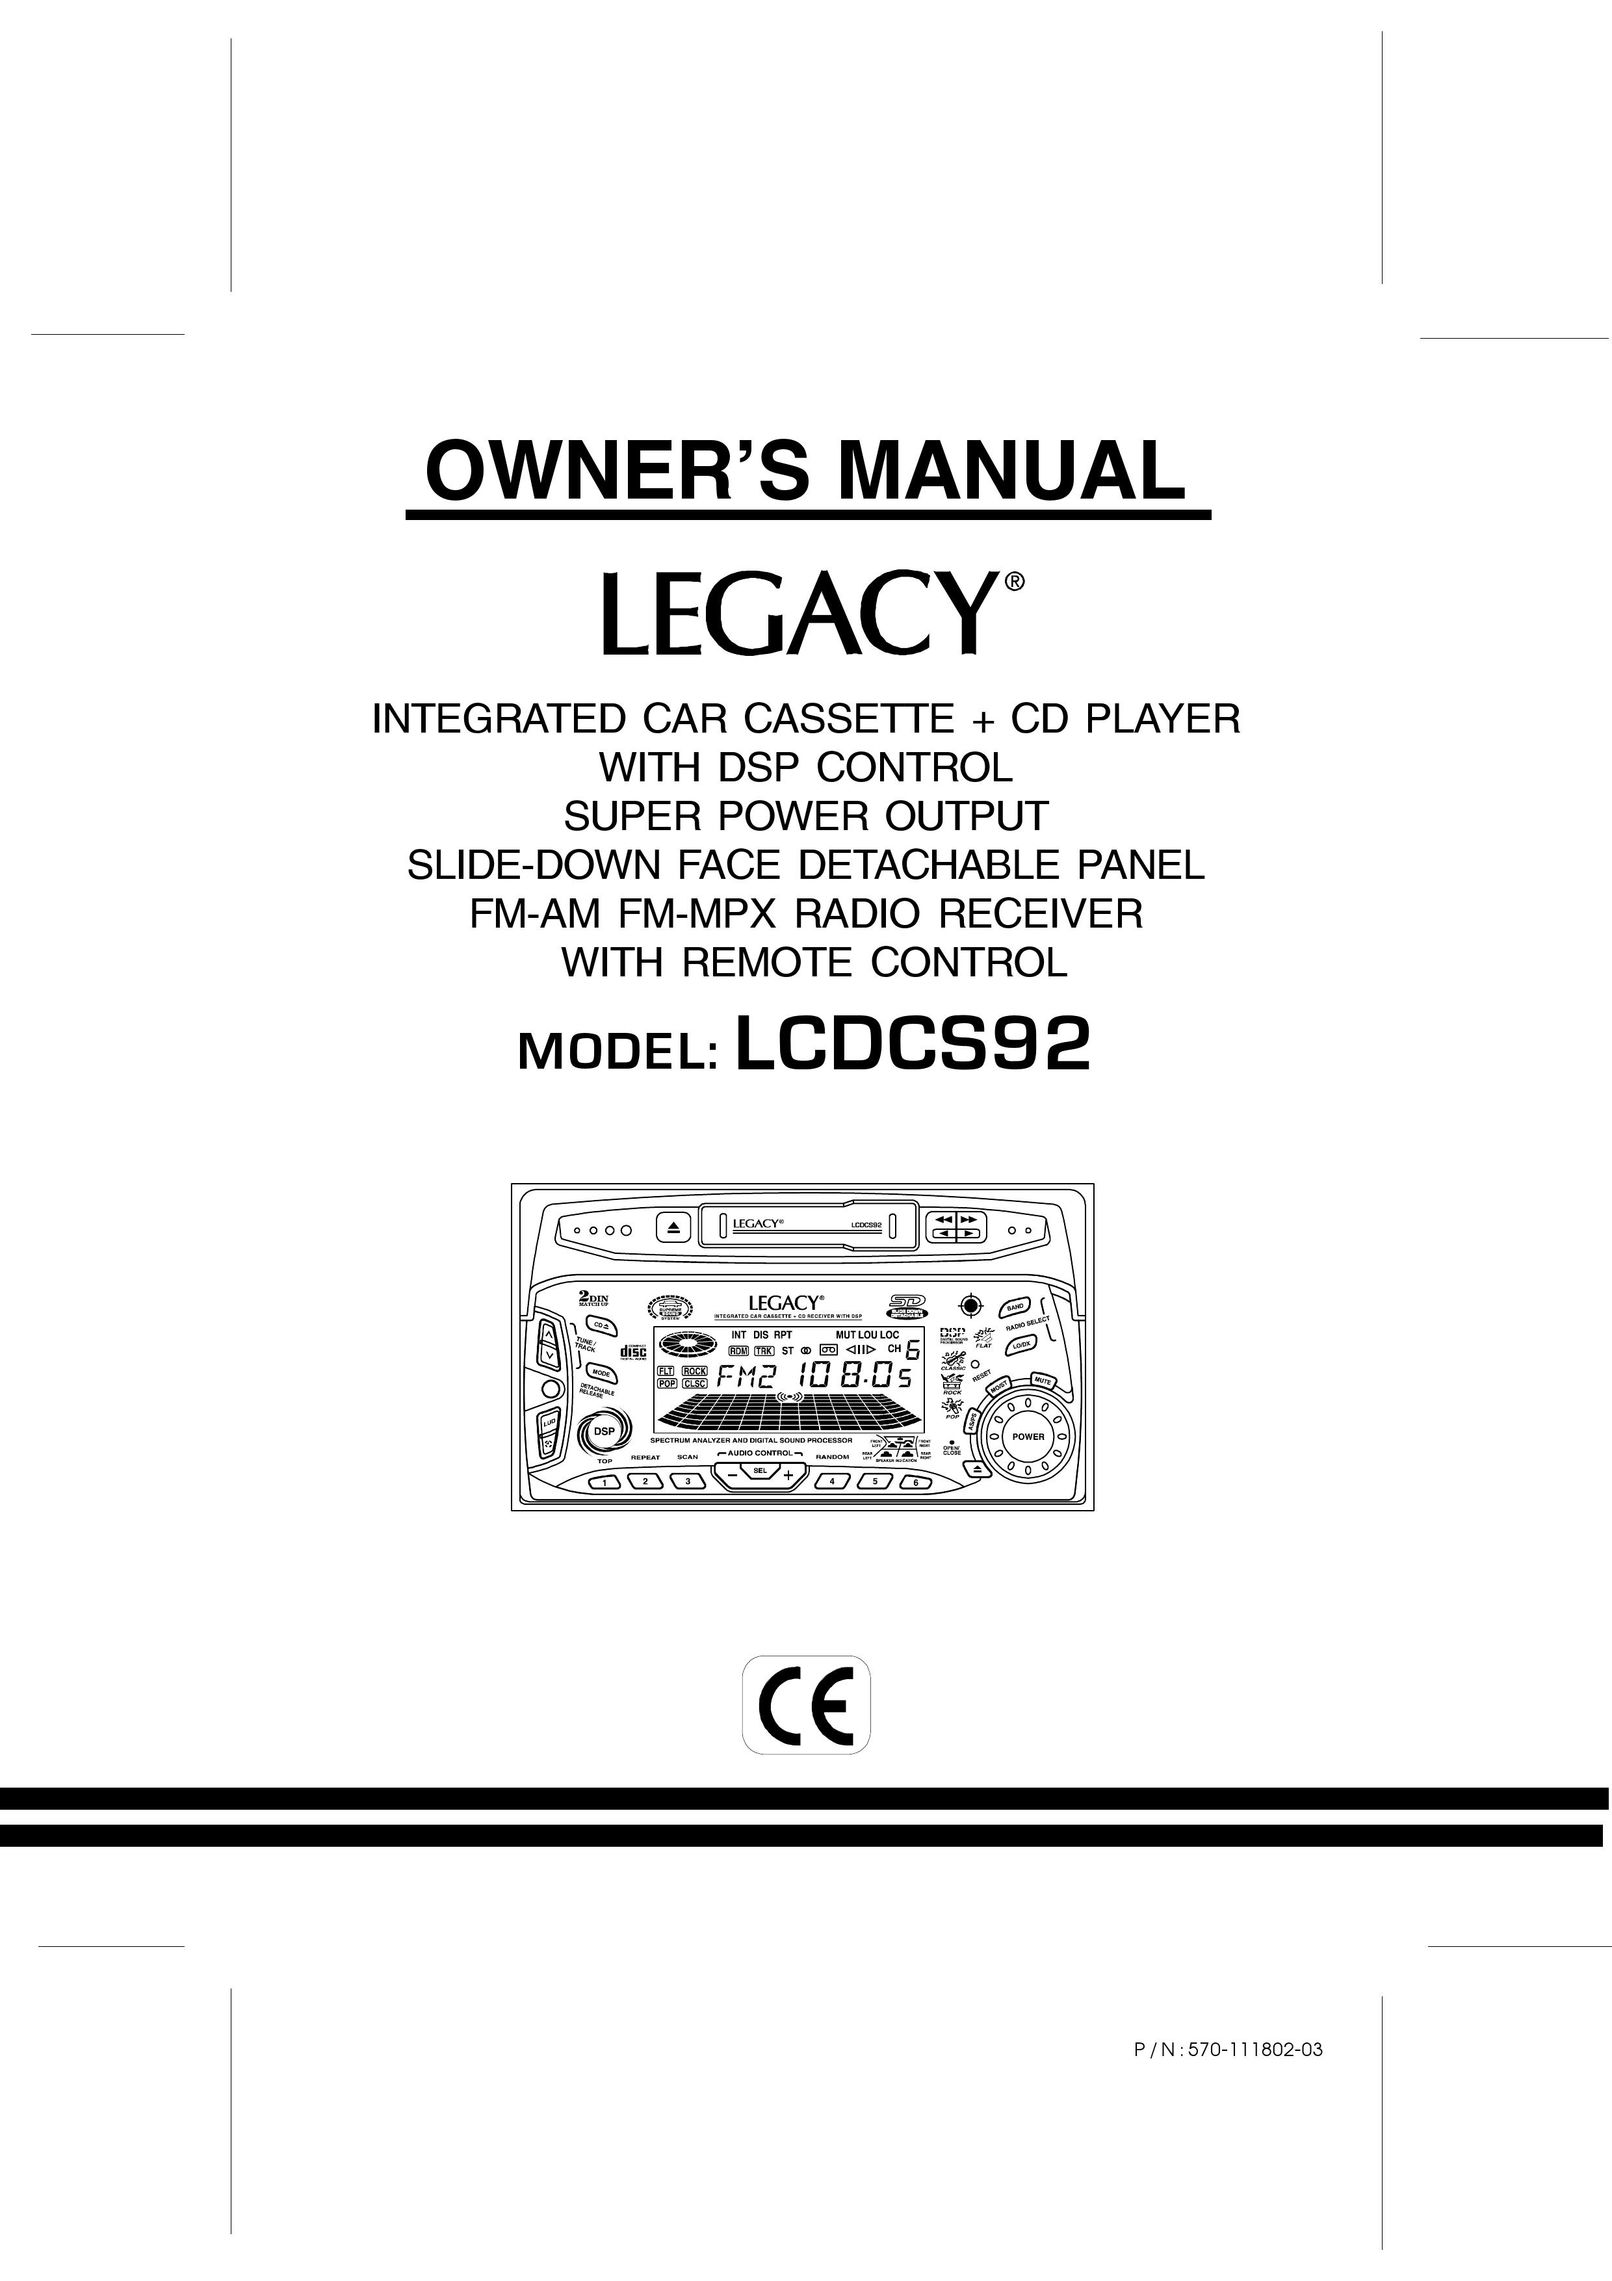 Legacy Car Audio LCDCS92 Car Stereo System User Manual